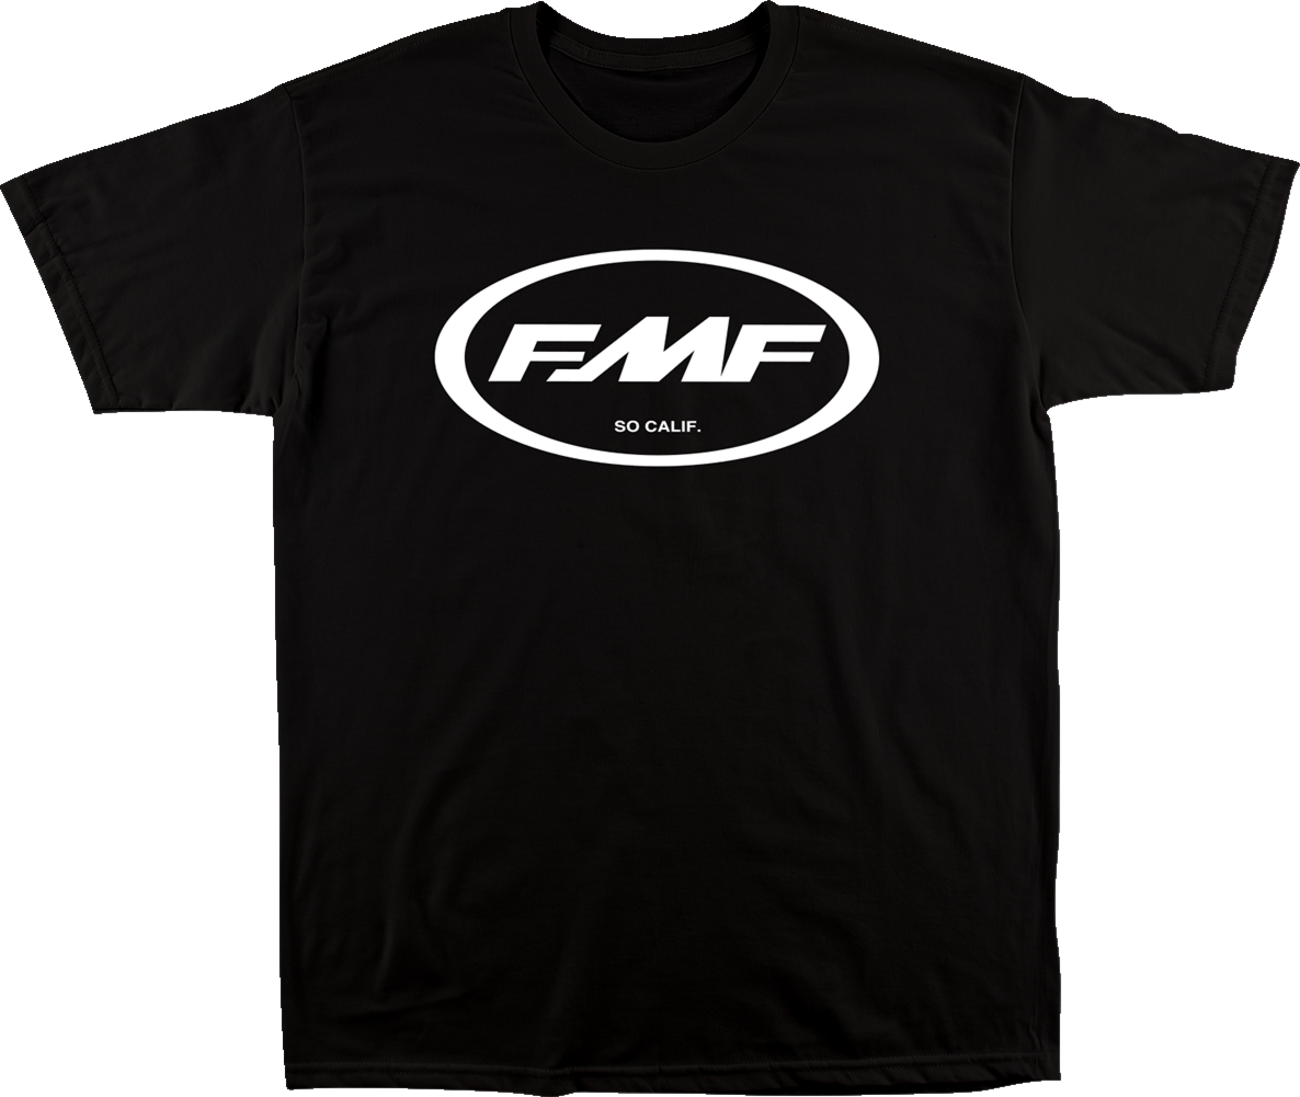 FMF Factory Classic Don T-Shirt - Black/White - Large SP23118918BLWL 3030-23124